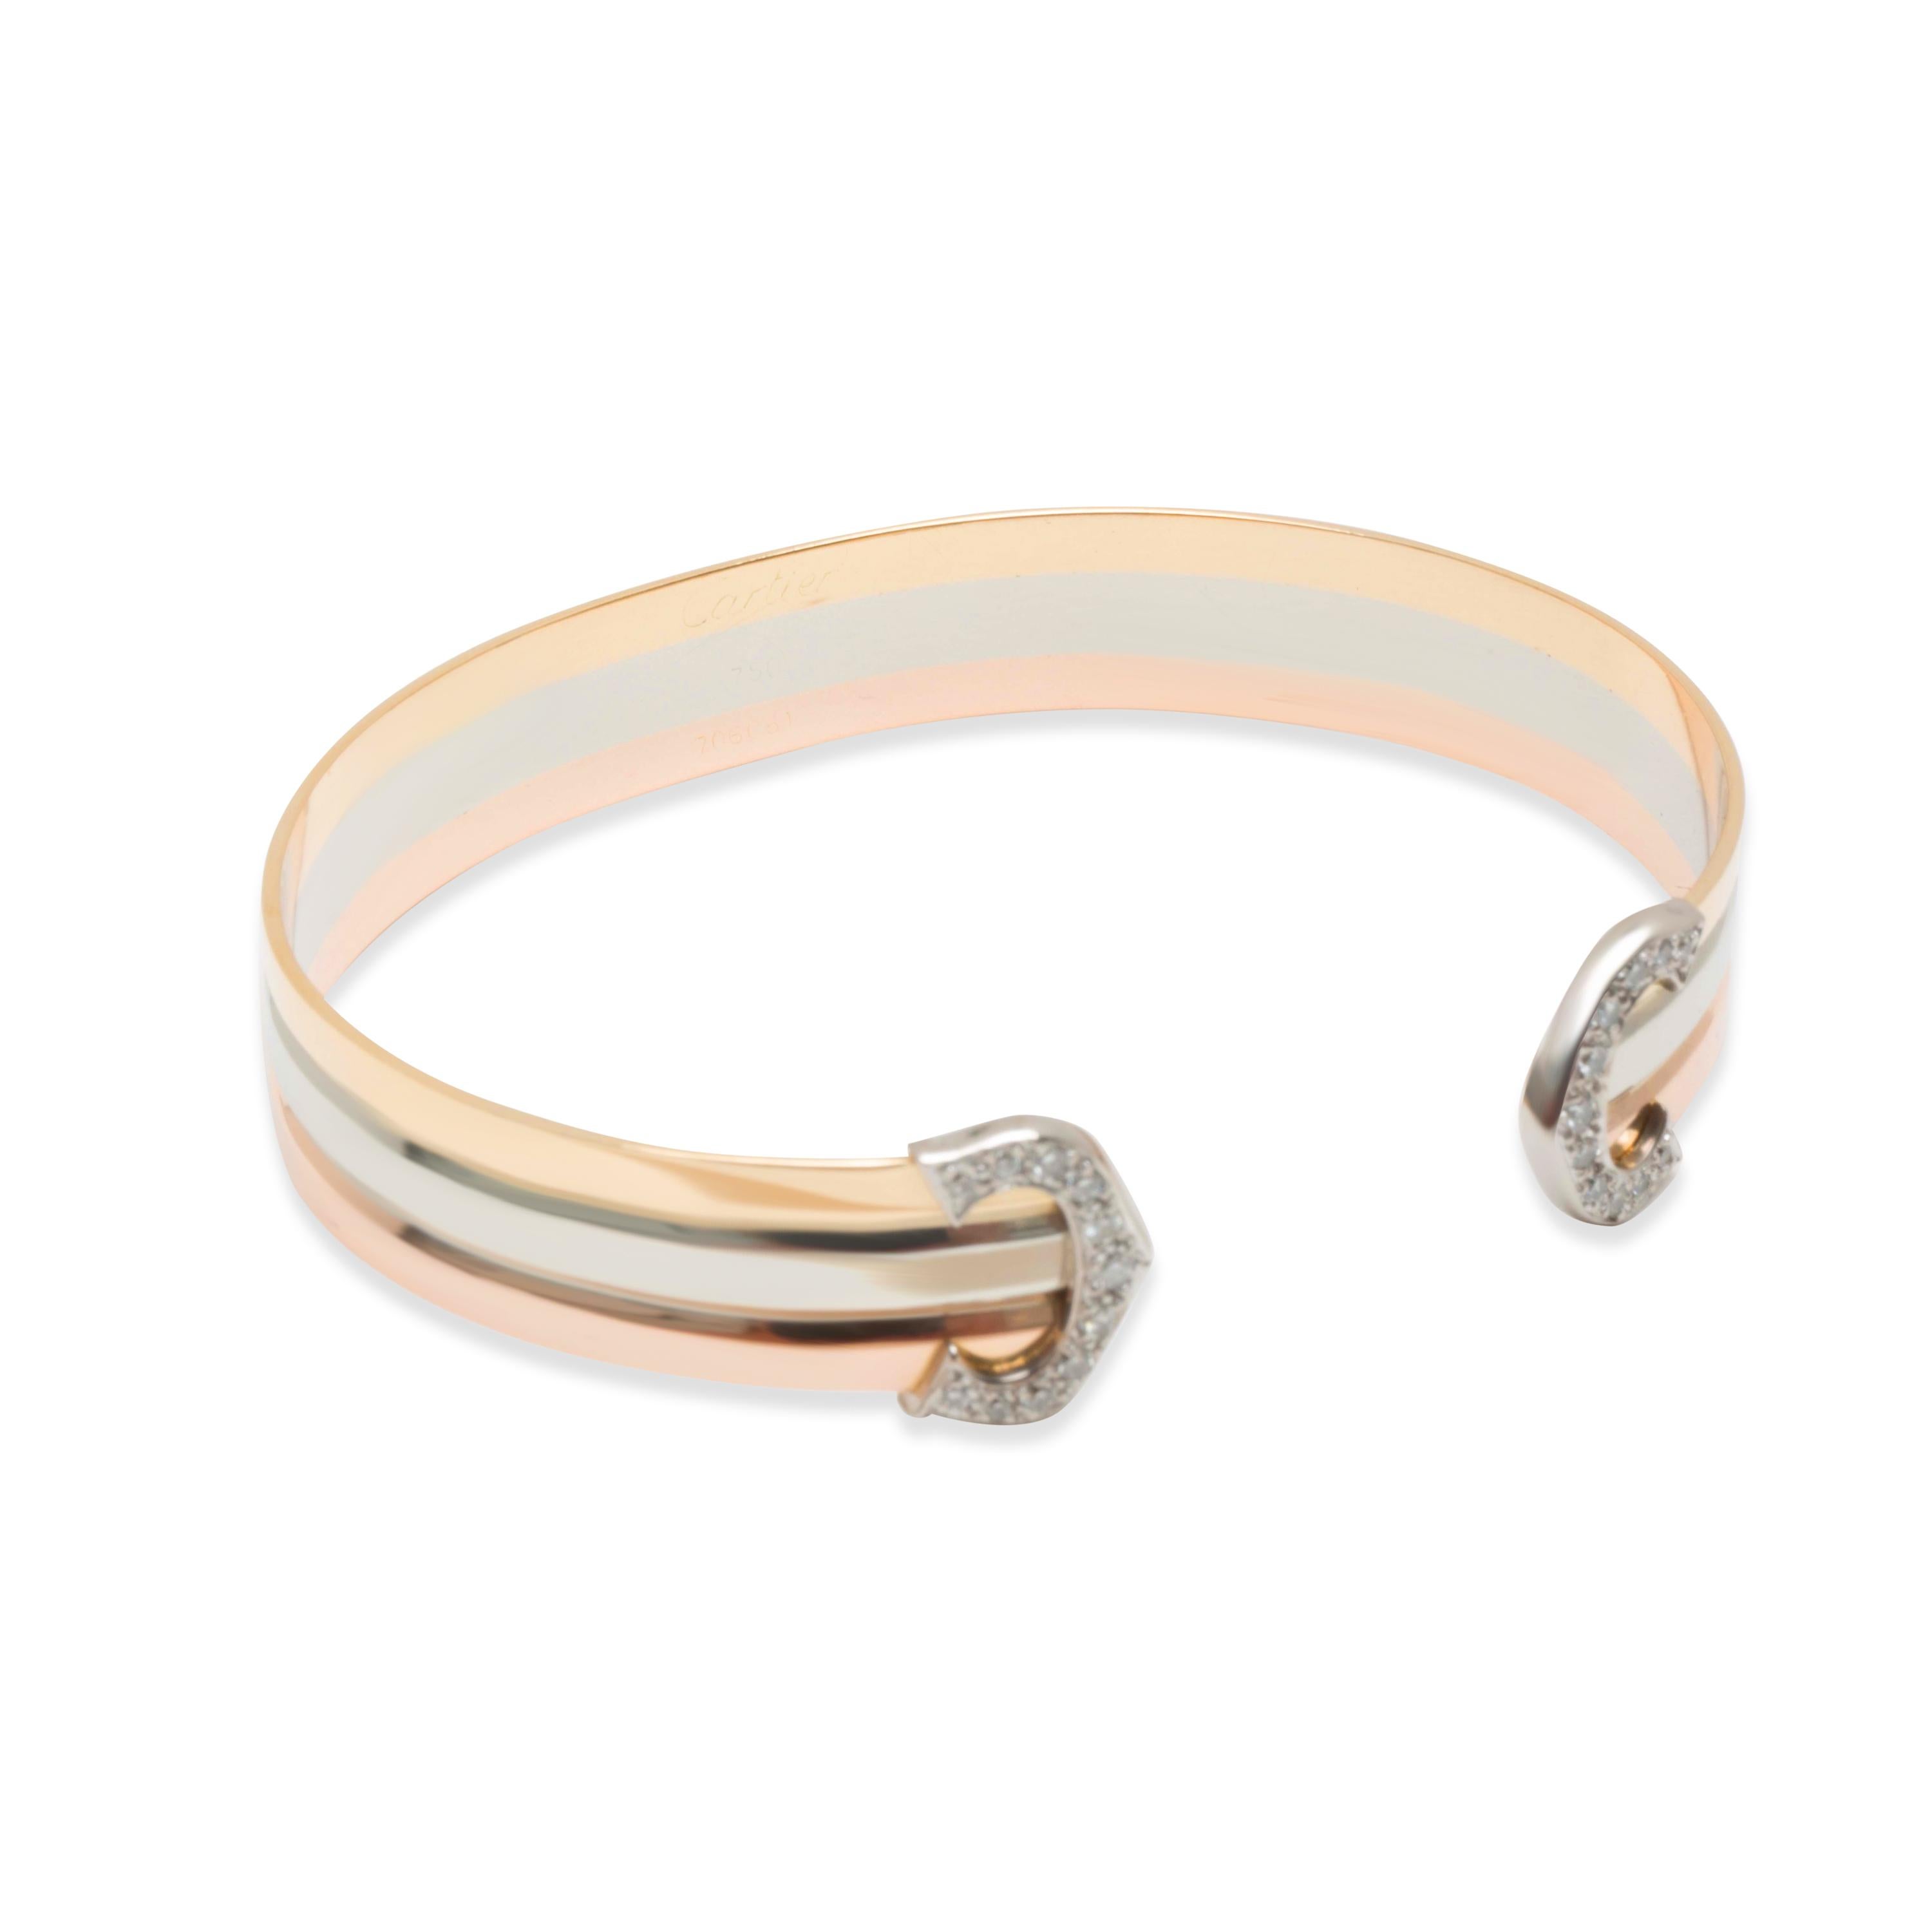 Women's Cartier Diamond C Cuff Bracelet in 18K Yellow, White and Rose Gold '0.25 Carat'